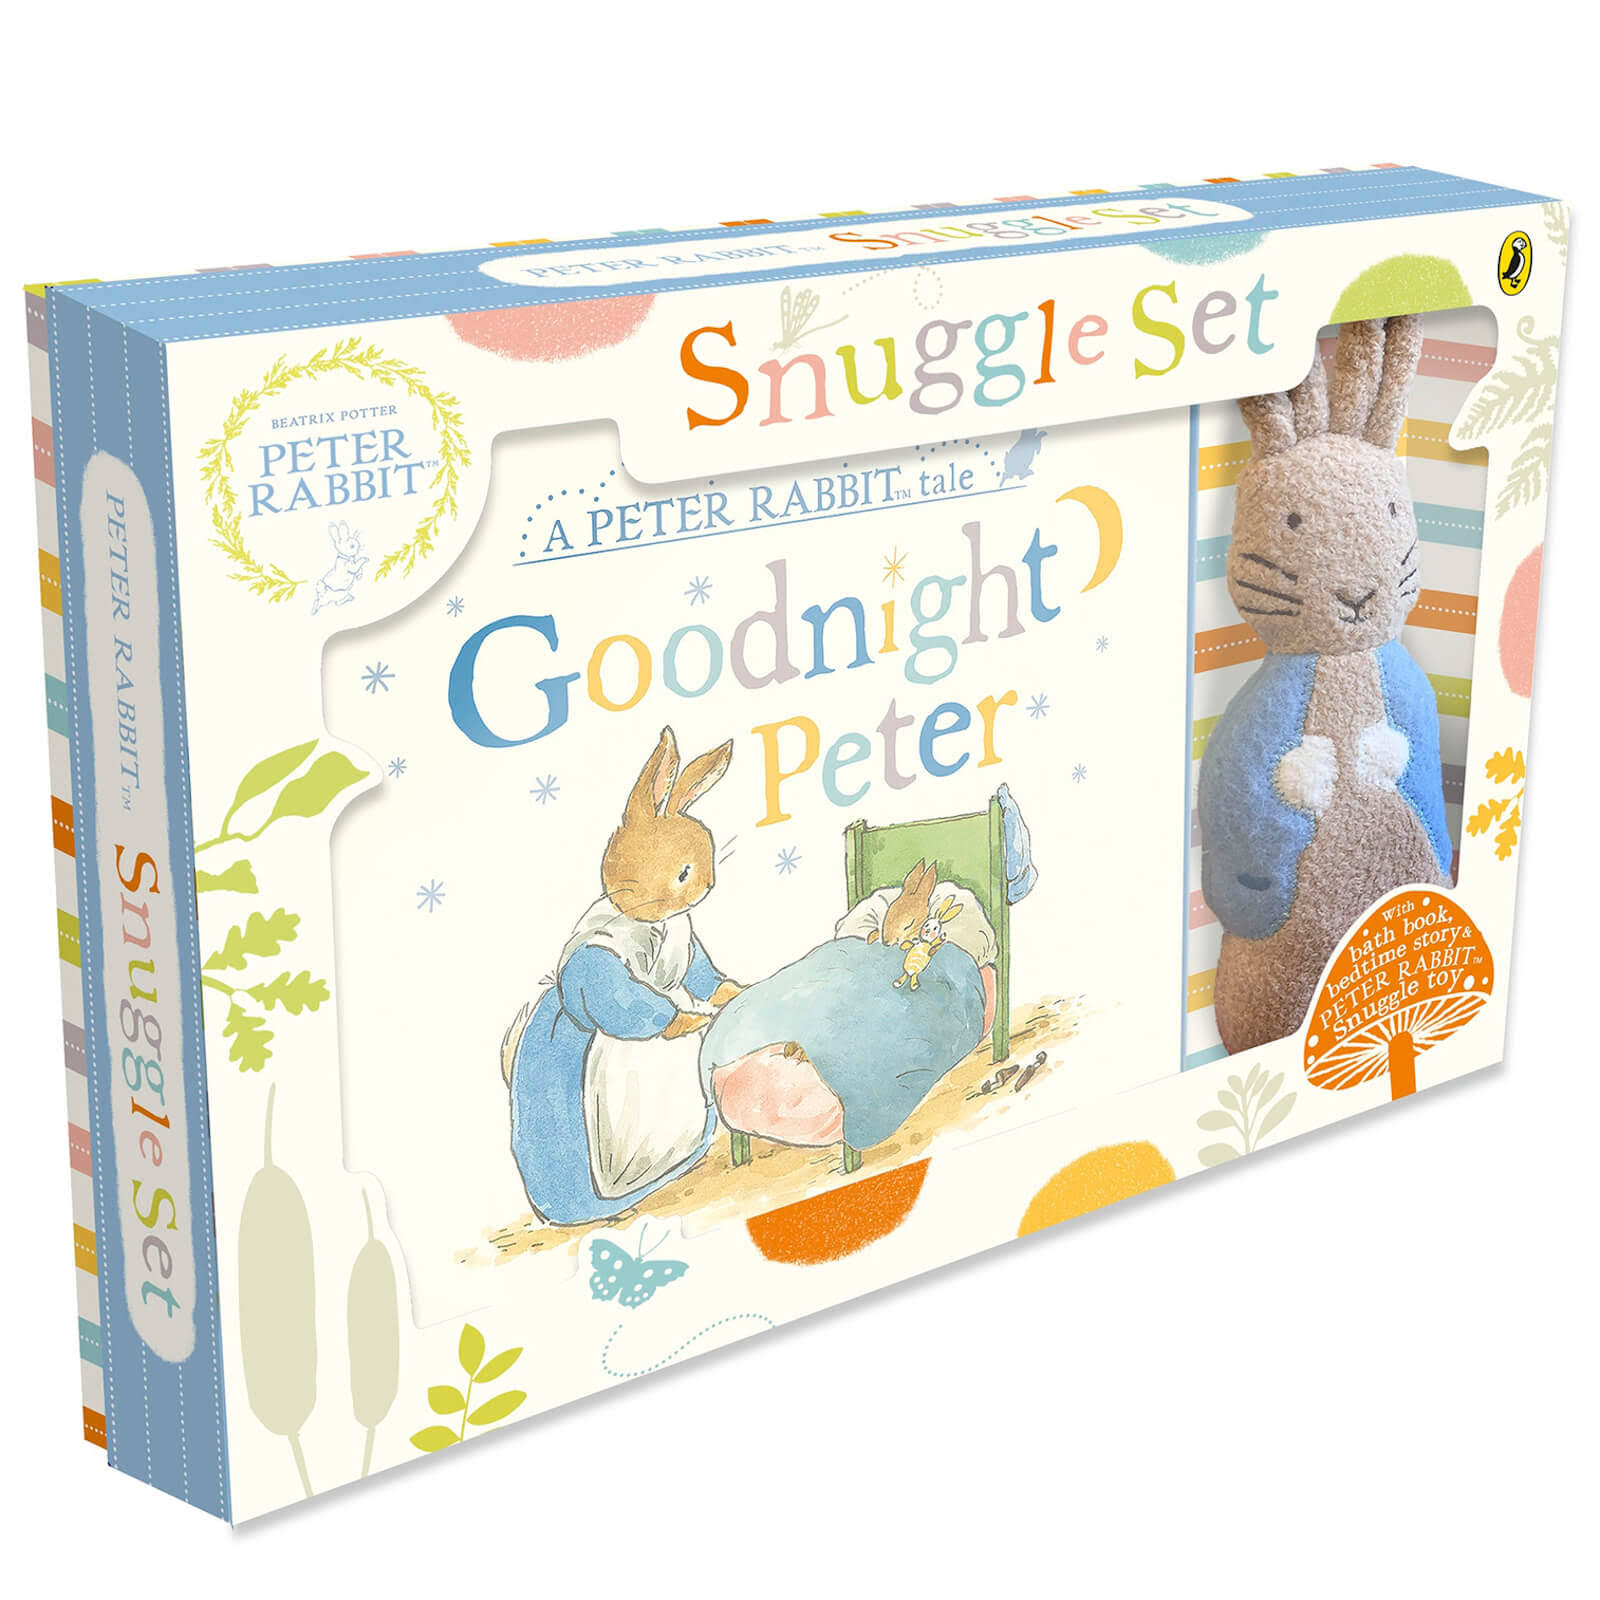 Peter Rabbit Snuggle Set by Beatrix Potter